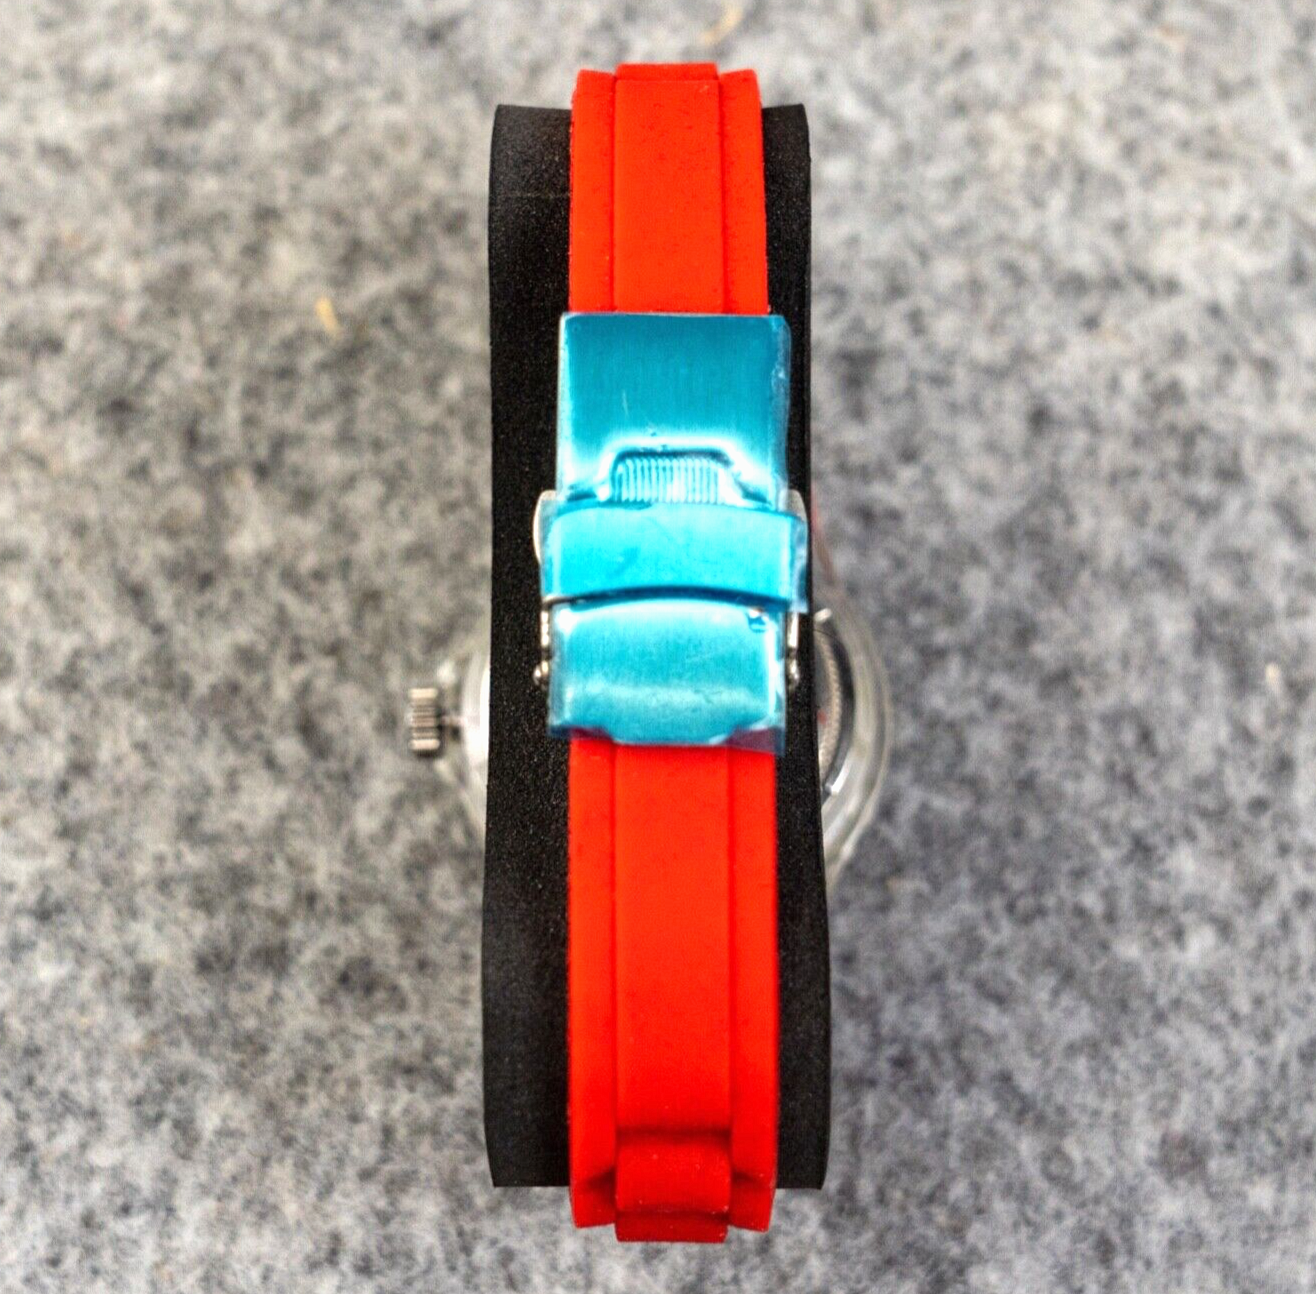 Moulinsart "Tintin Time" Watch 82414 Soviets Plane Red strap Unisex wristwatch